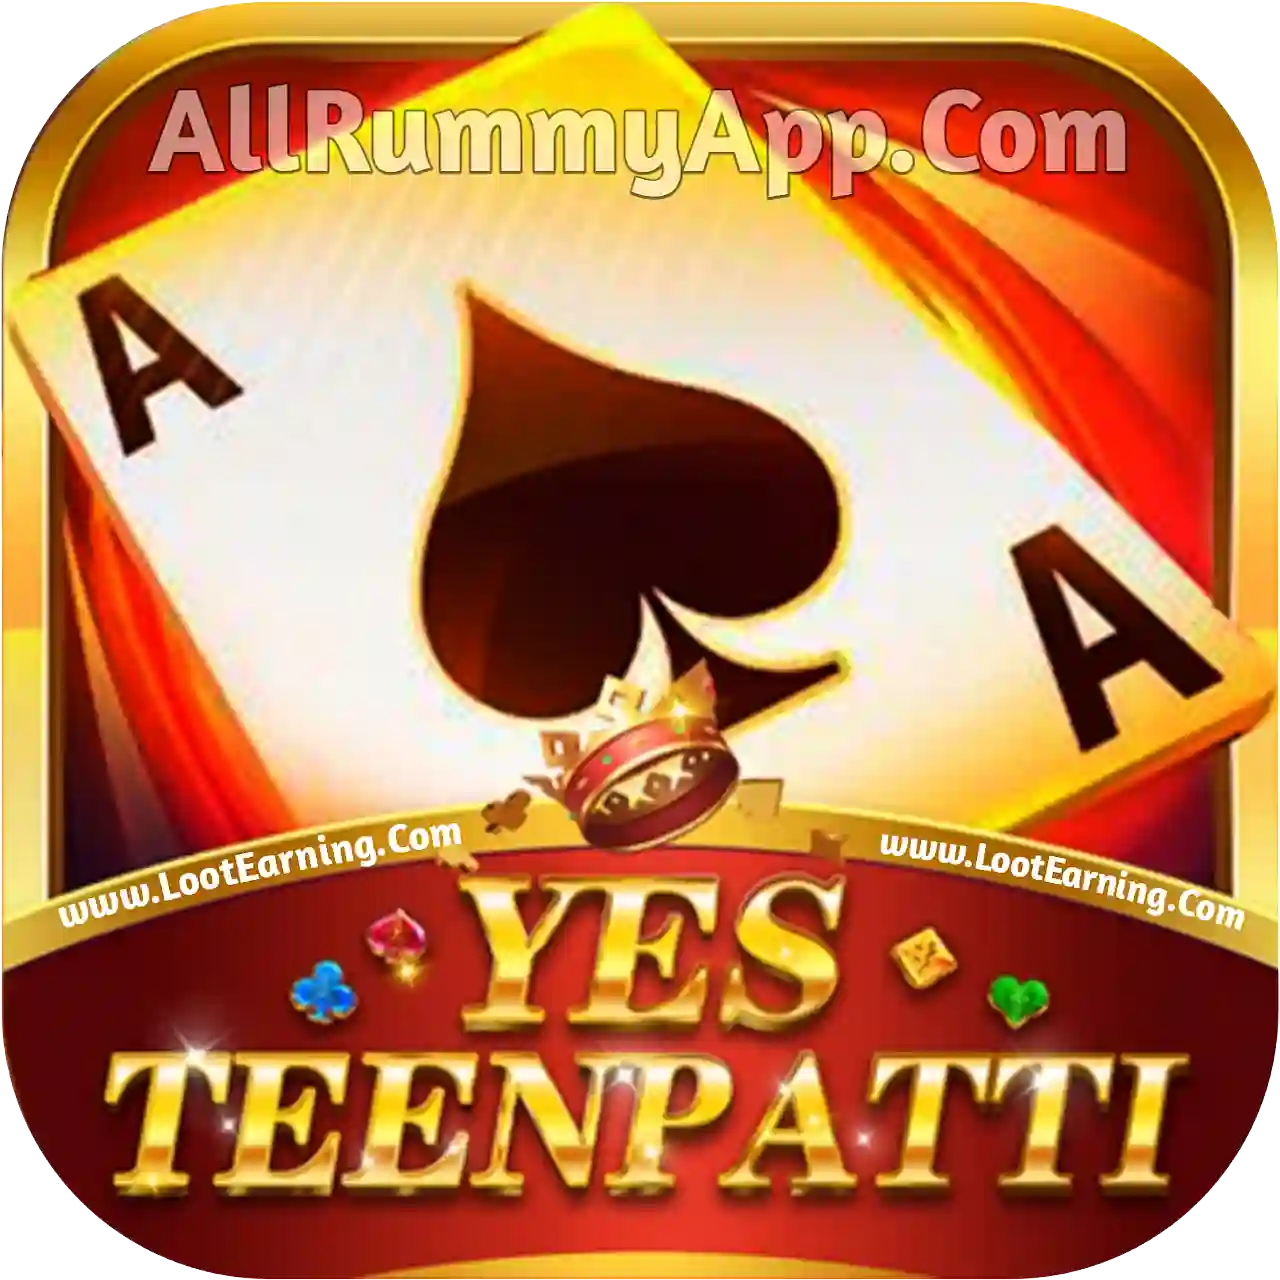 Teen Patti Yes - All Teen Patti App List